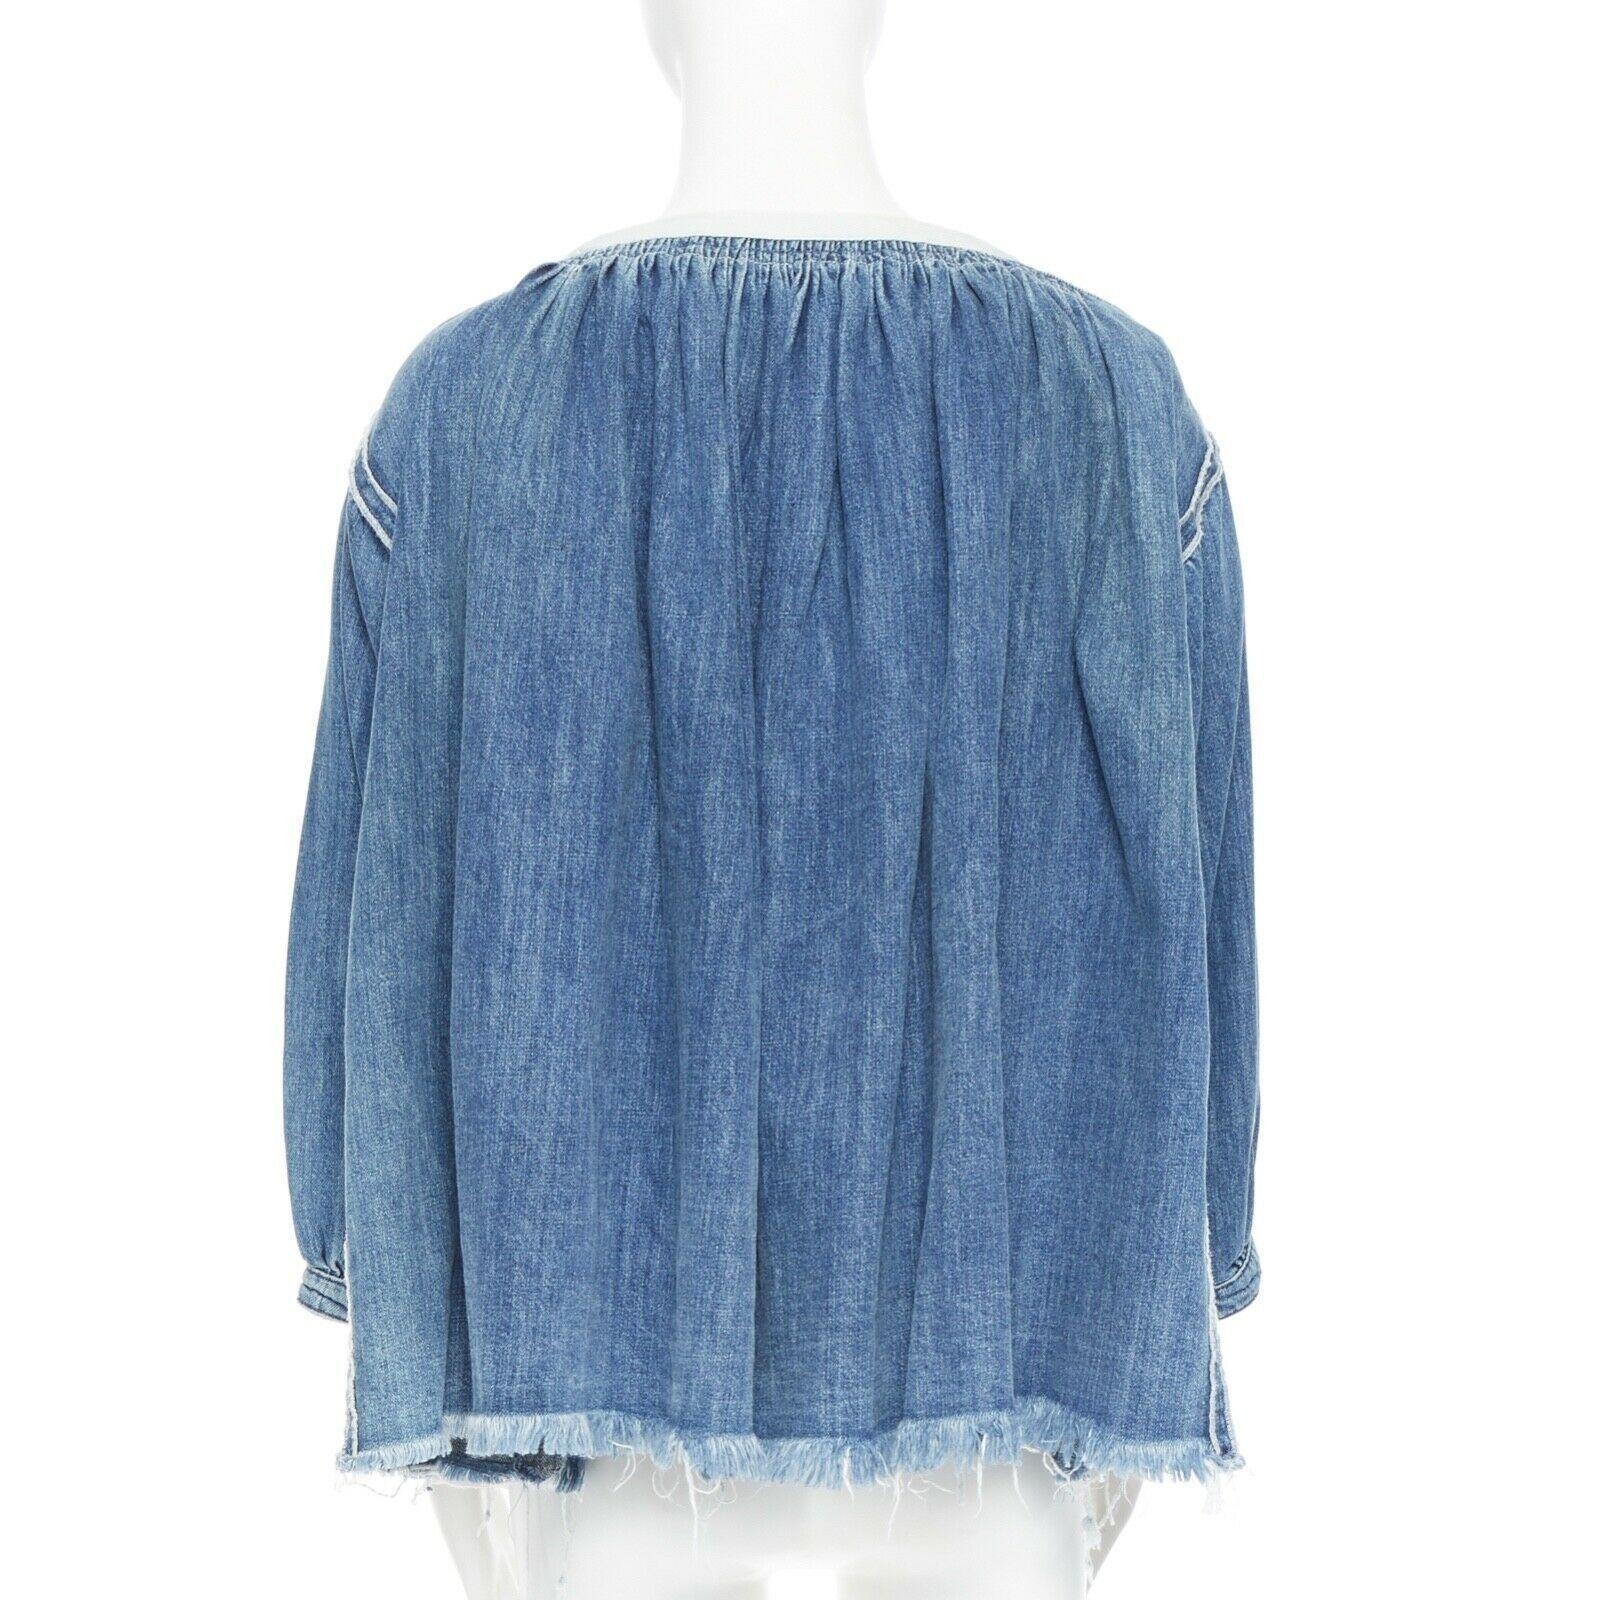 CHLOE 2016 blue denim blouse a-line baby doll top smocked frayed bohemian FR36 S 1